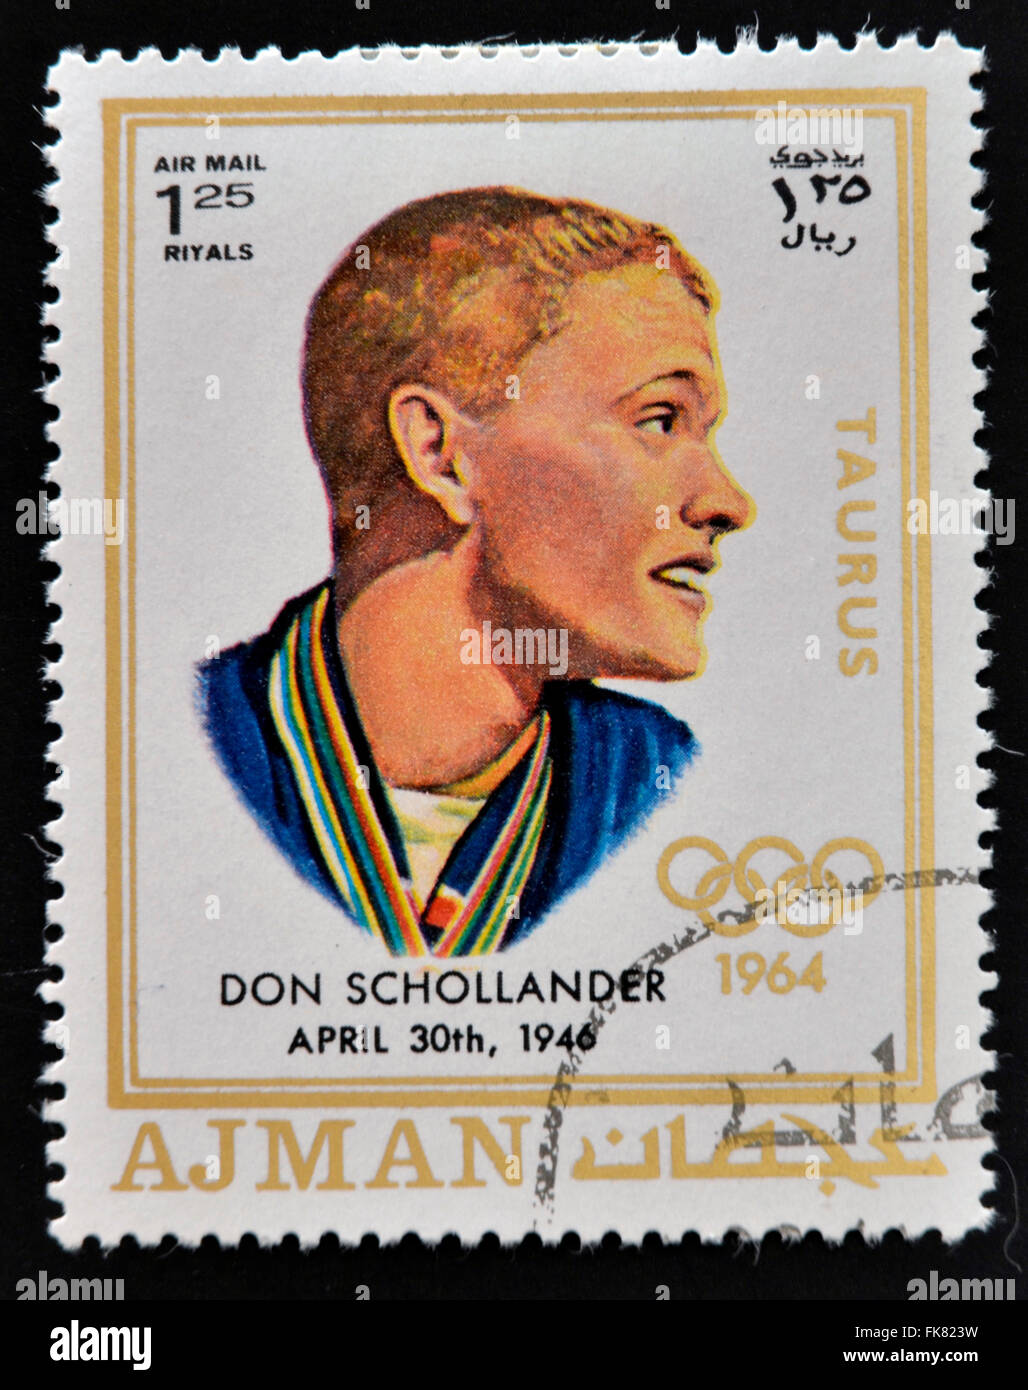 AJMAN - CIRCA 1970: A stamp printed in Ajman shows Donald Schollander, circa 1970 Stock Photo